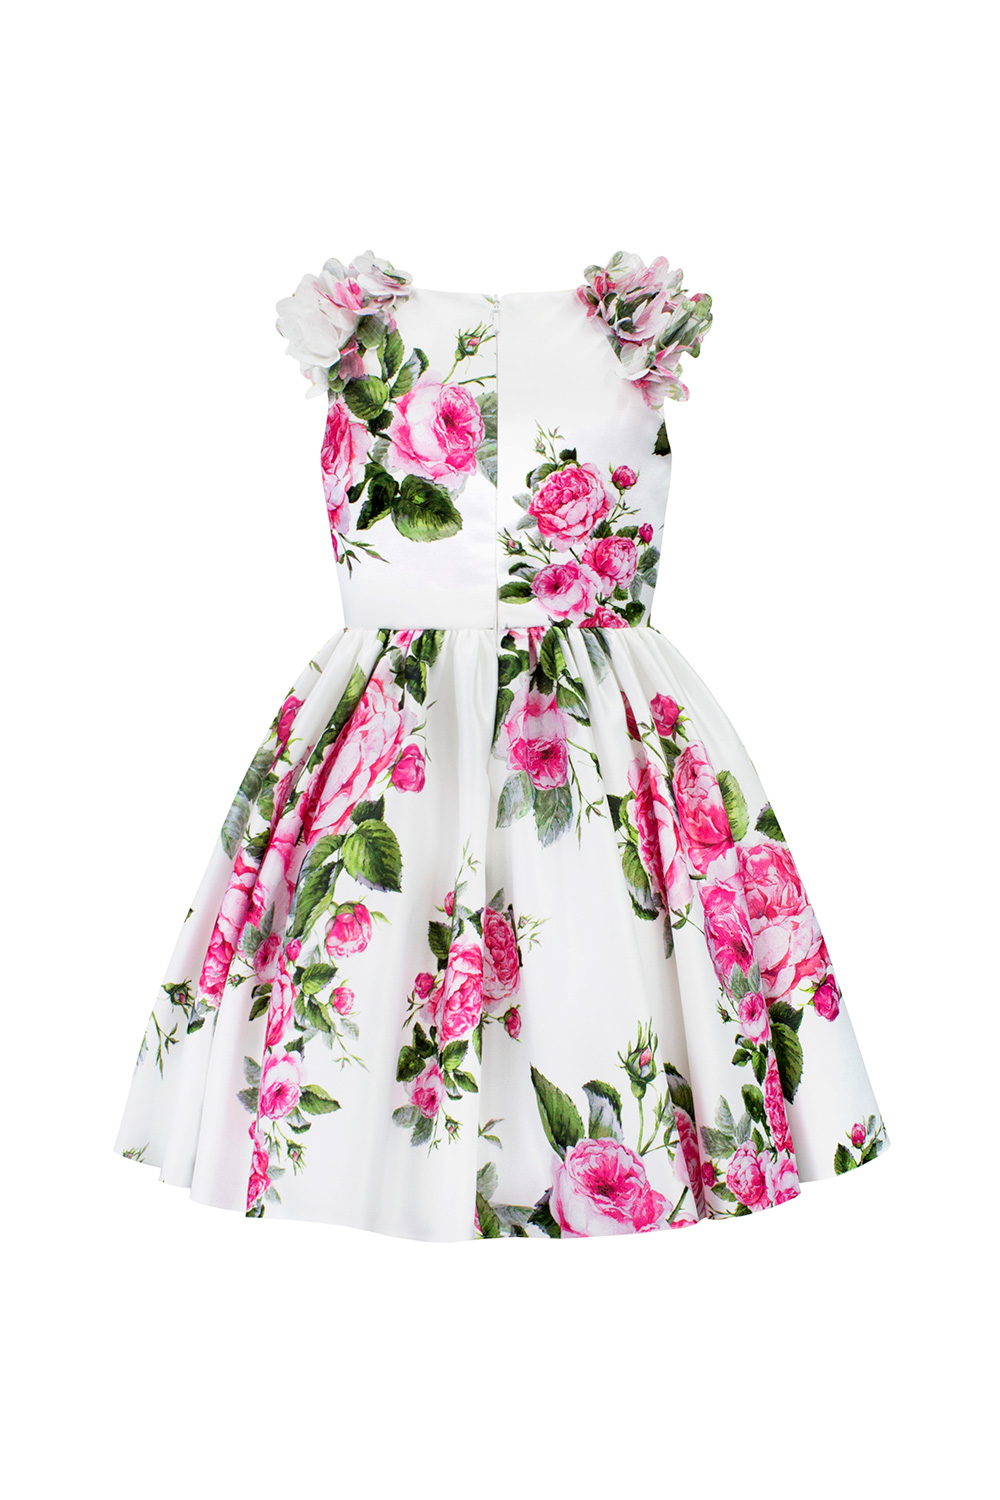 Ivory and Pink Flower Gown - Designer Childrenswear